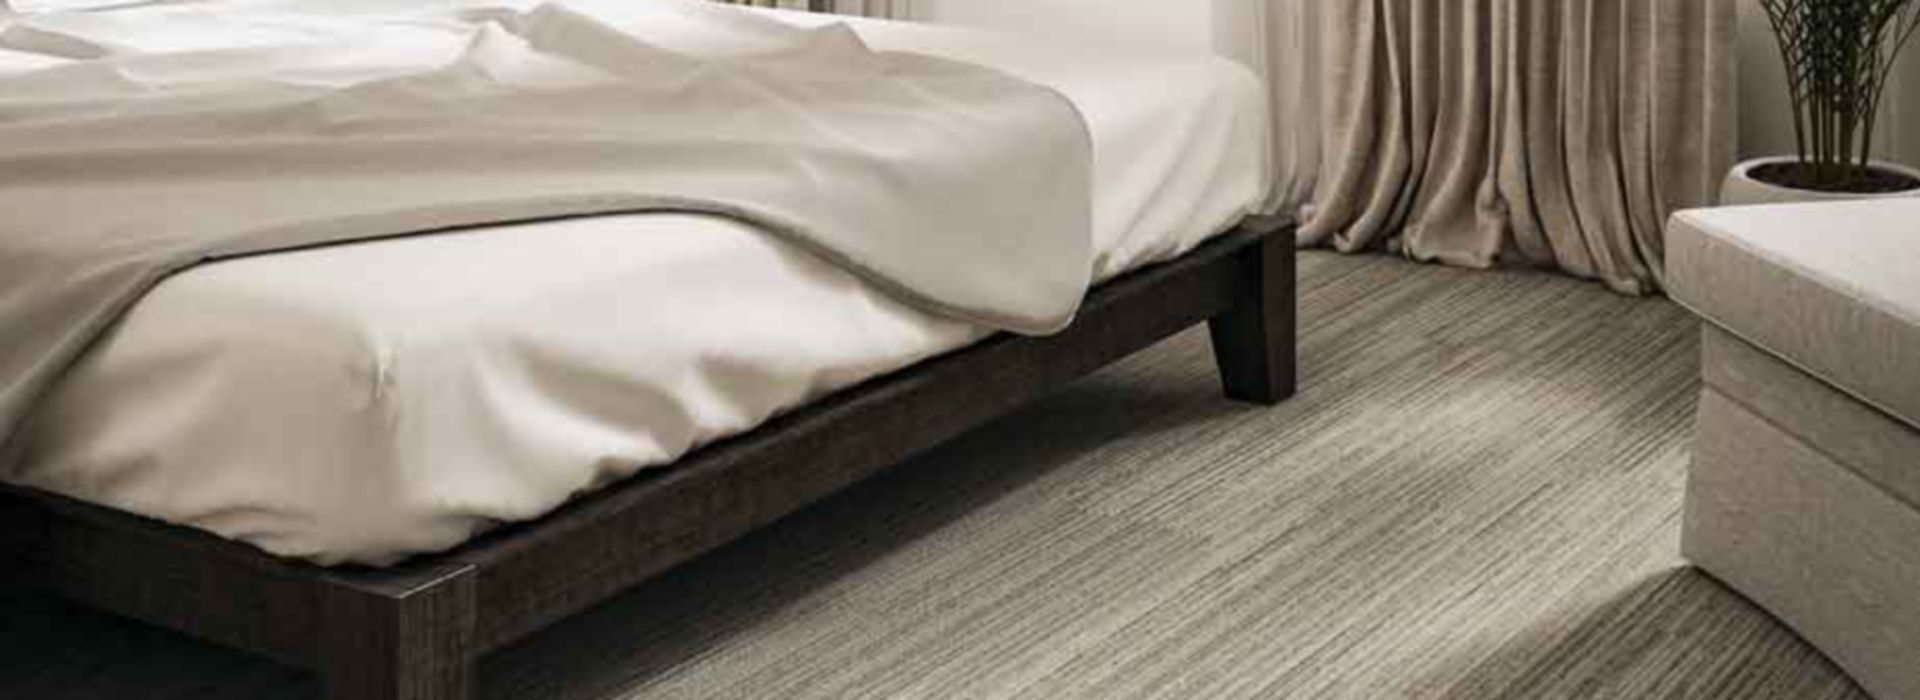 Interface SWTS 110 plank carpet tile in hotel guest room numéro d’image 1